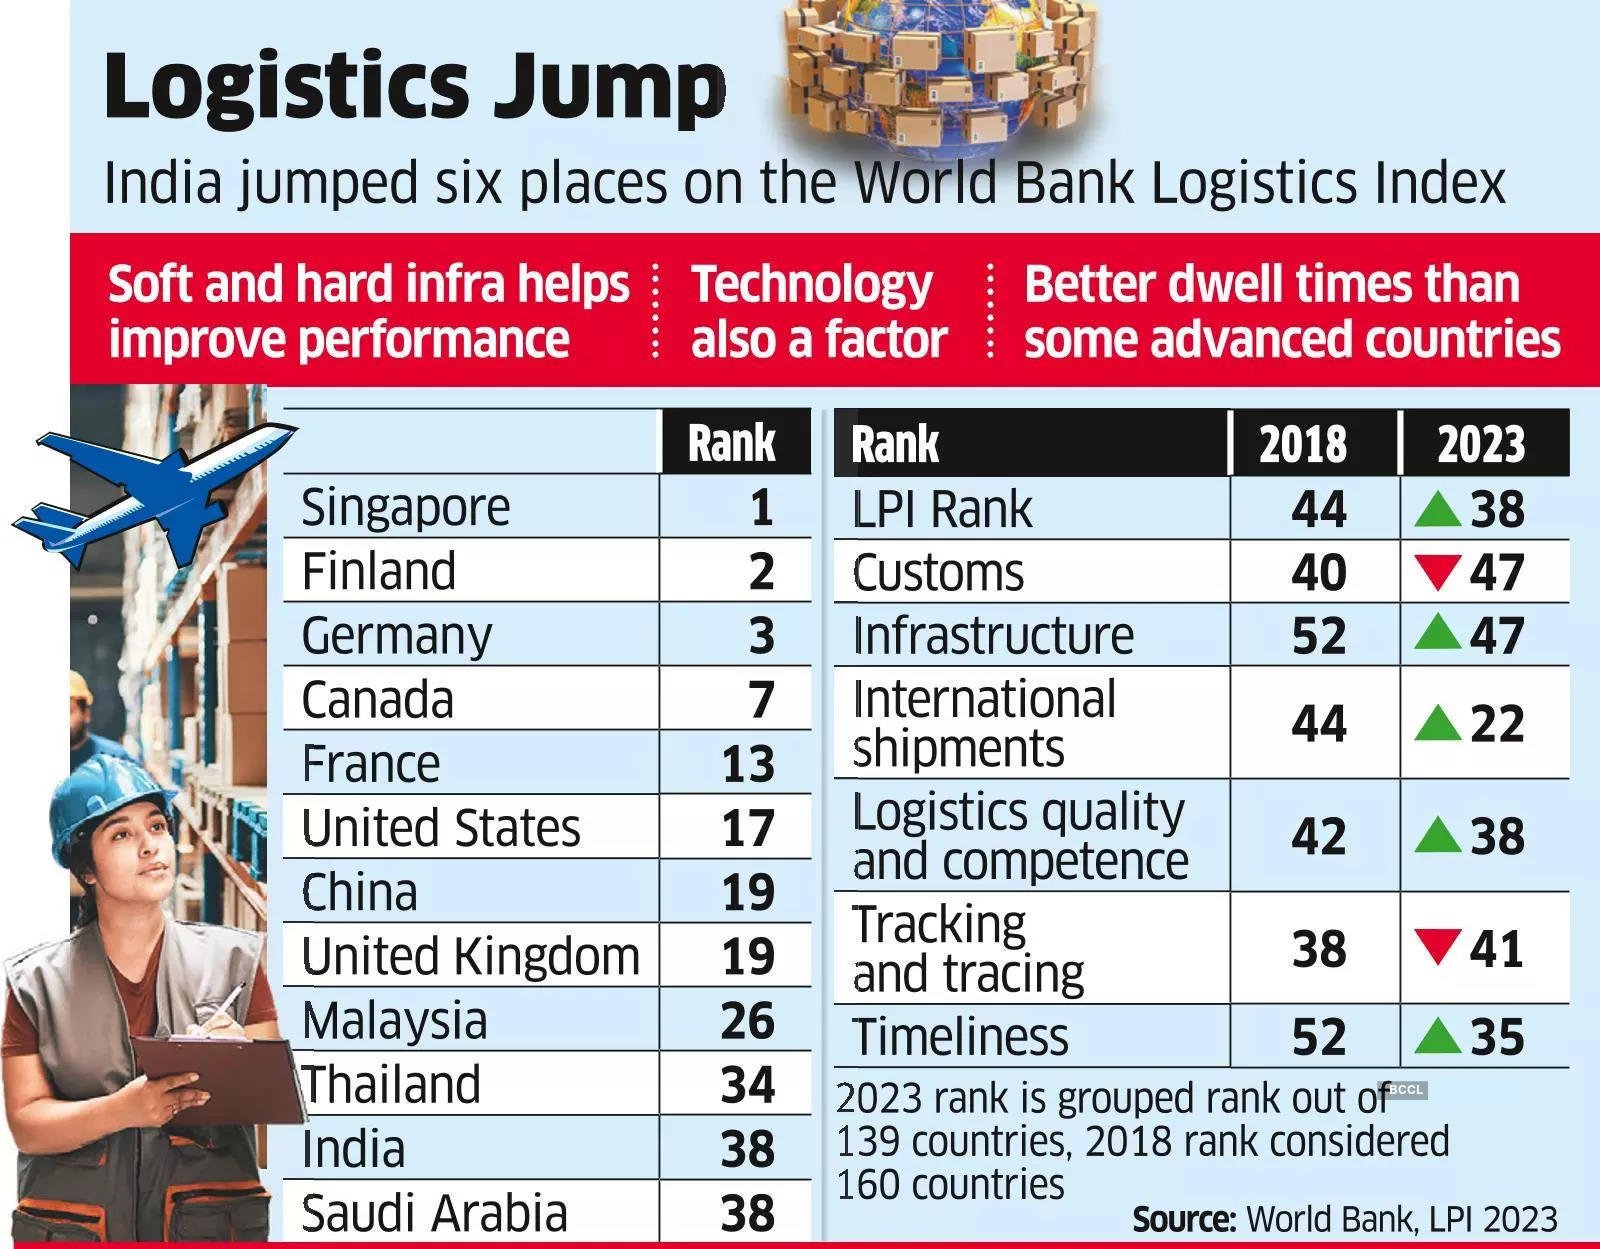 world bank: India raises its logistics game, rises six spots on World Bank Index to 38 - The Economic Times